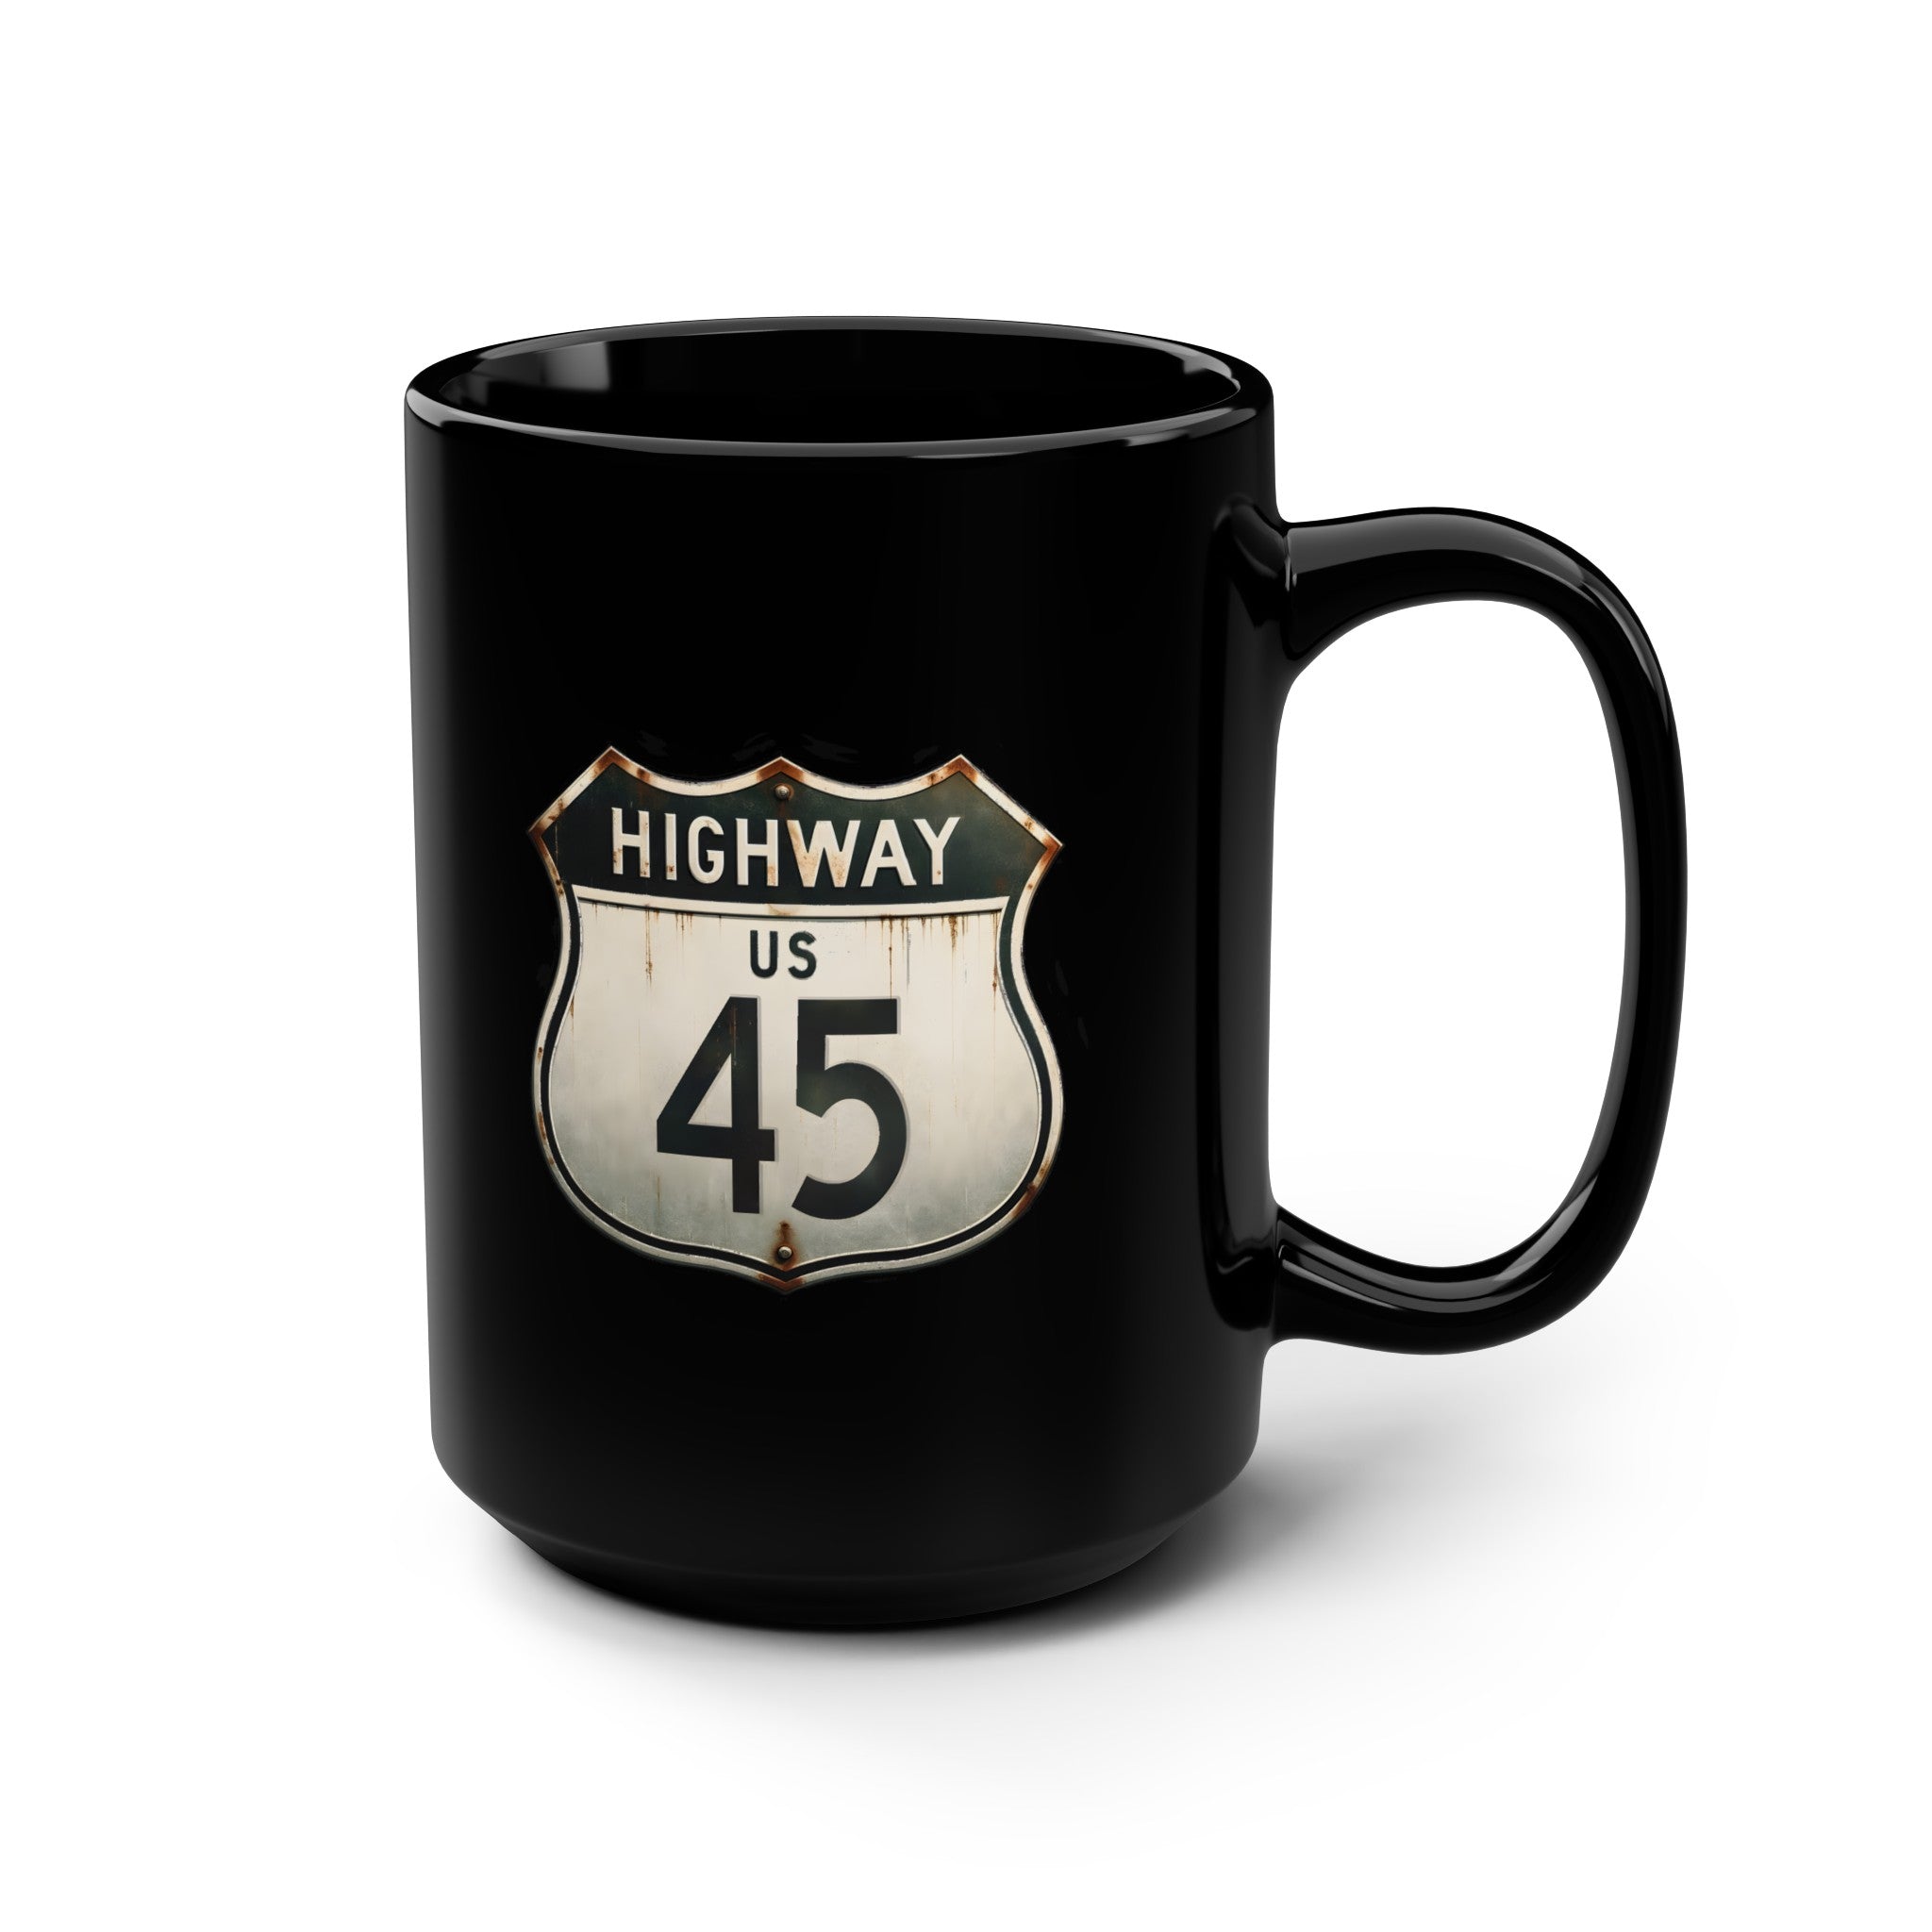 Highway 45 Black Mug, 15oz